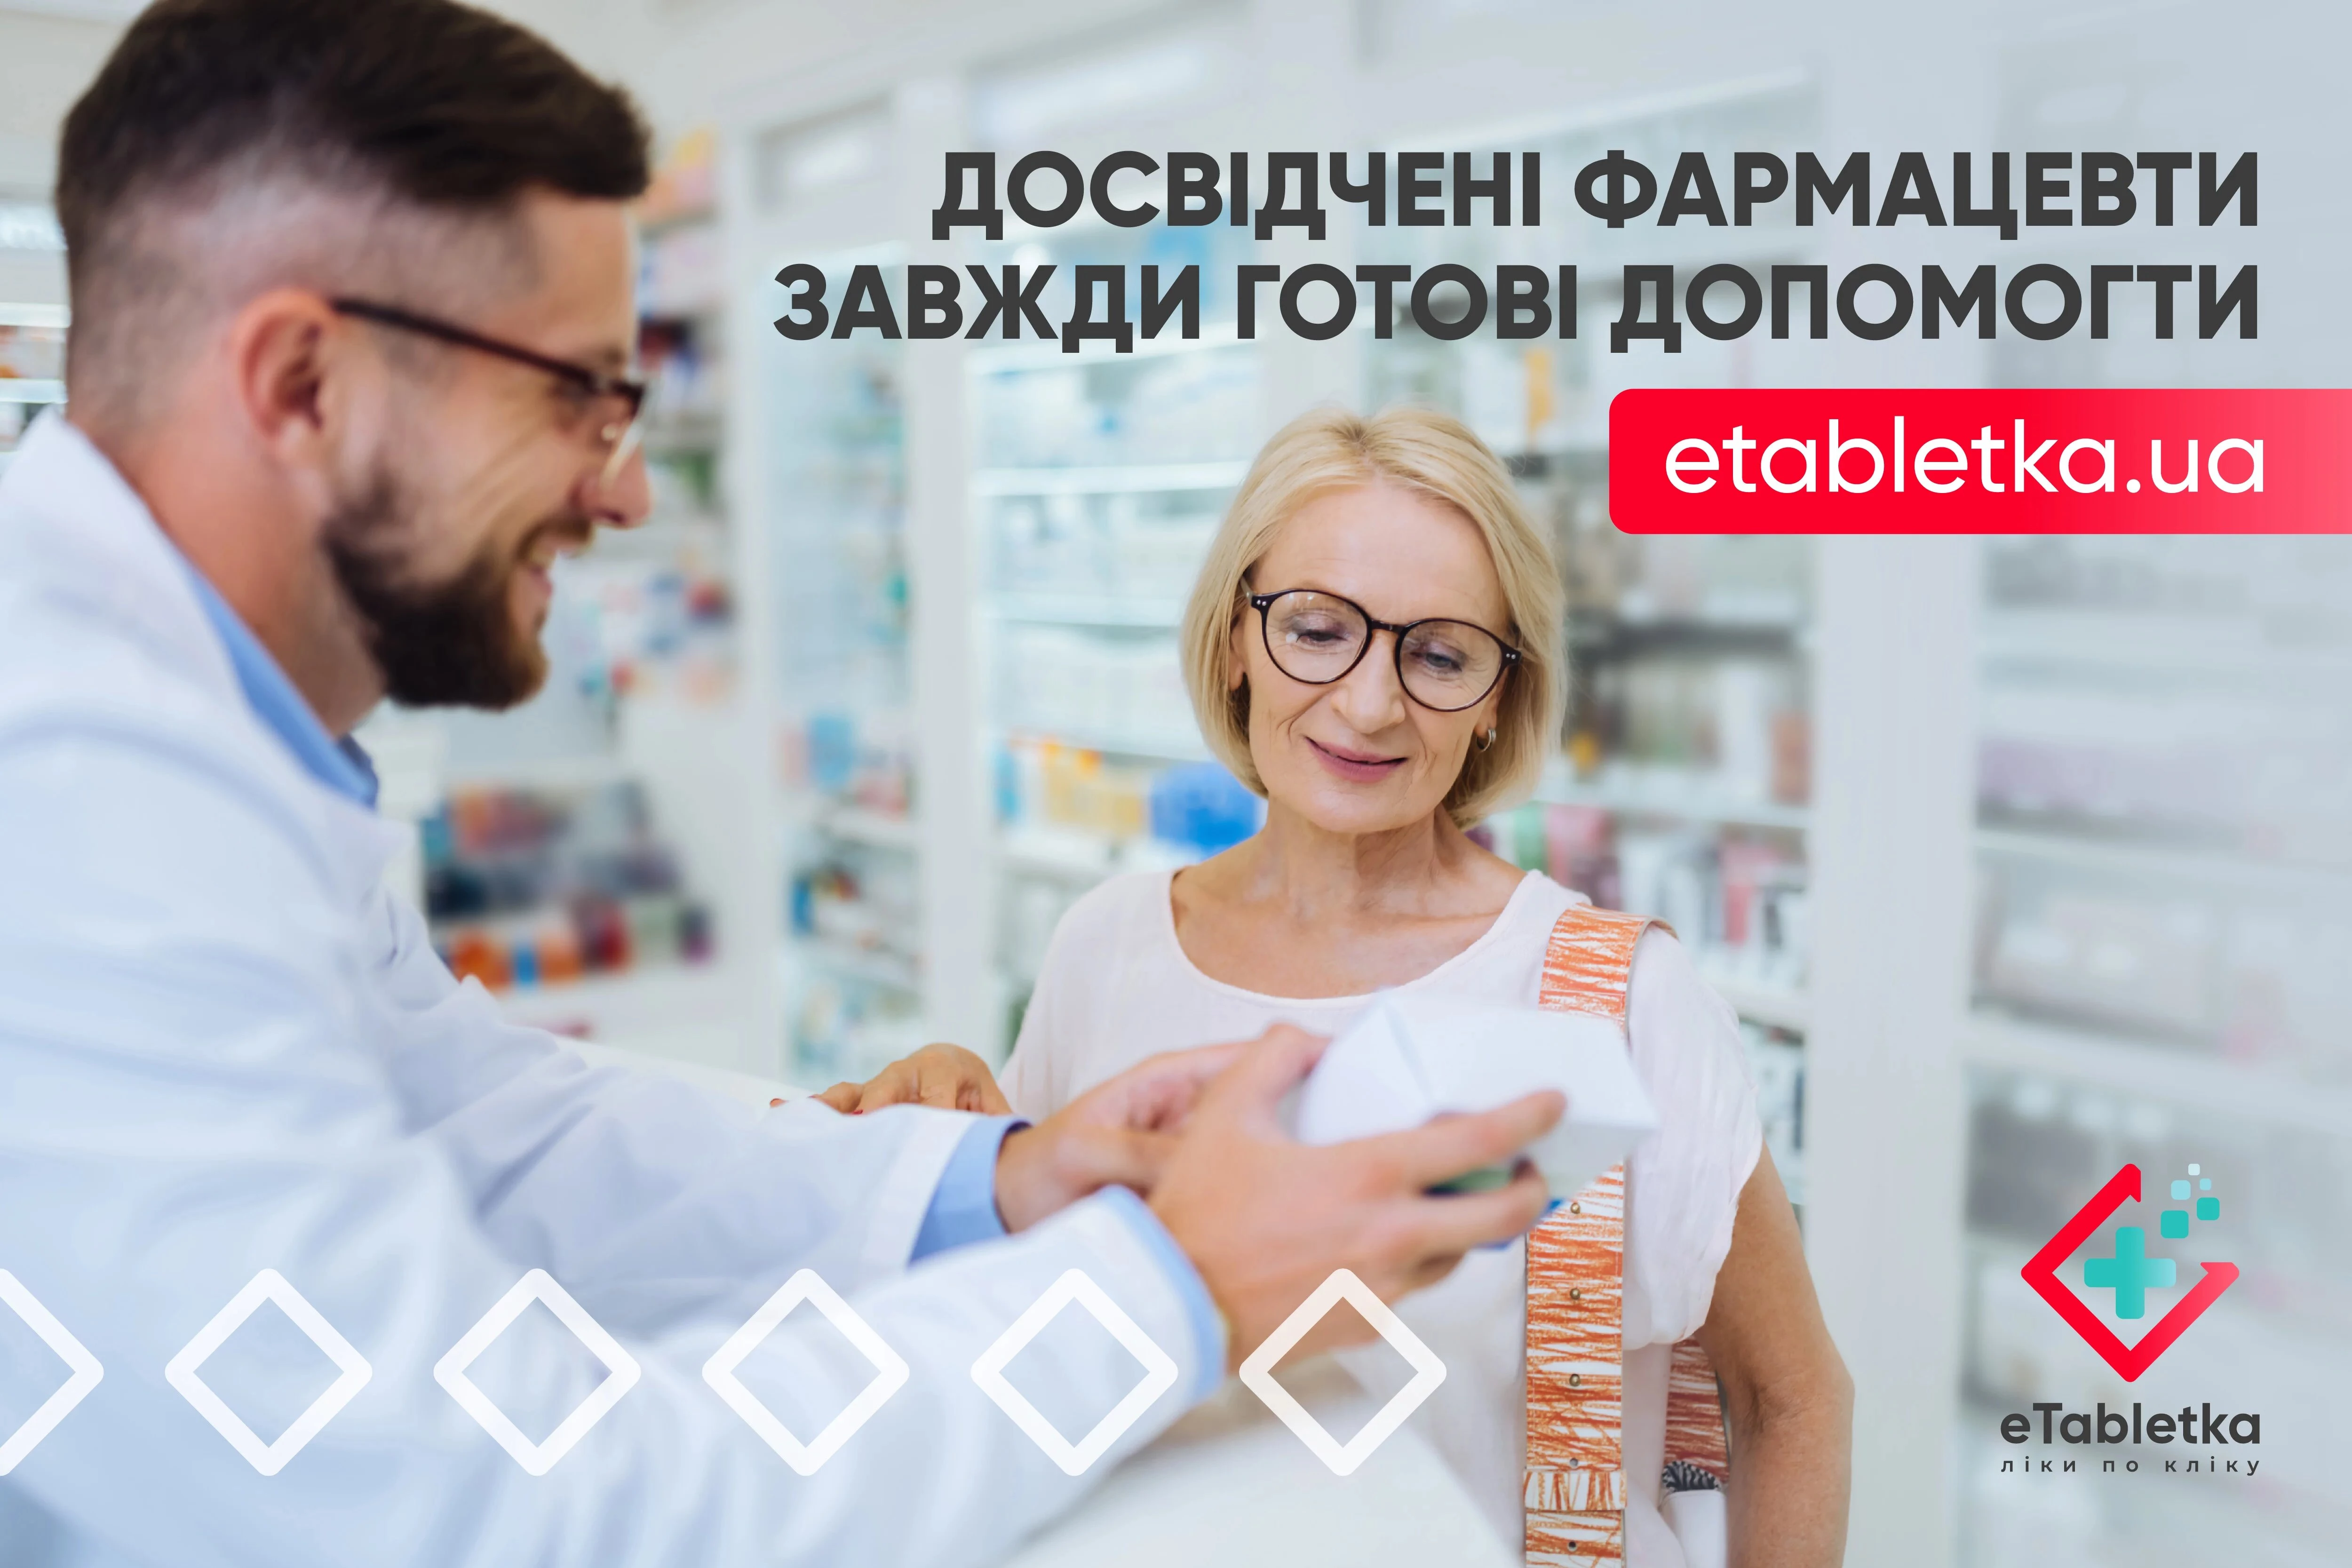 онлайн-аптека eTabletka